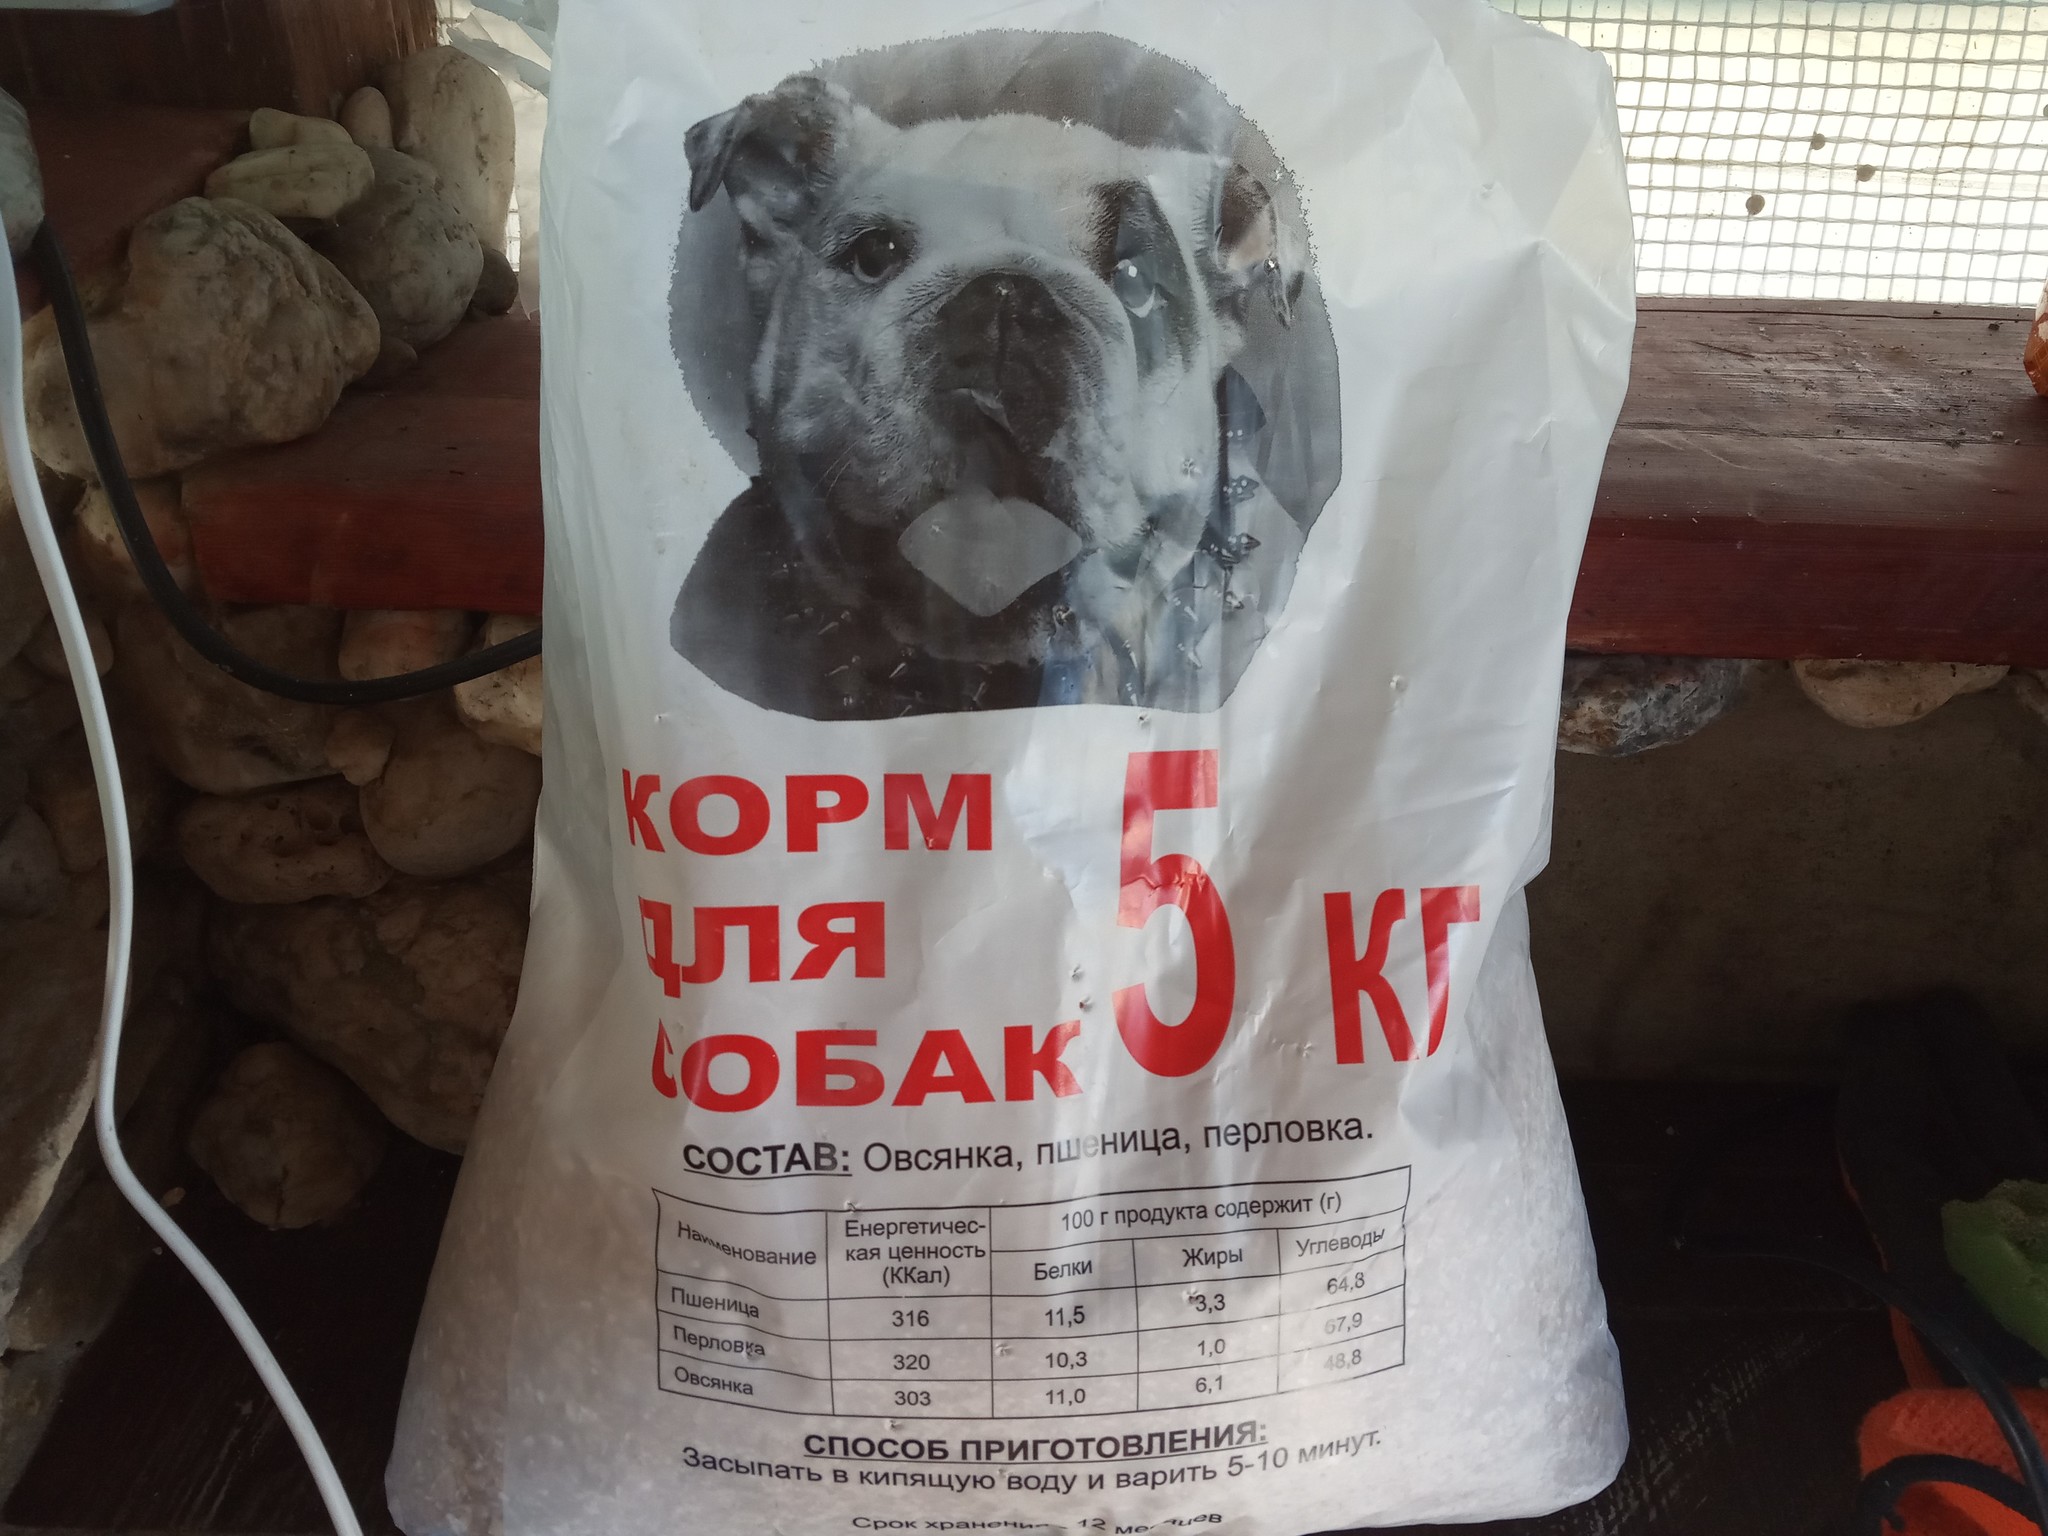 Купить корм для собак на авито. Глебушка корм для собак. Собачий корм из хлеба. Собачий корм в СССР. Монс корм для собак.